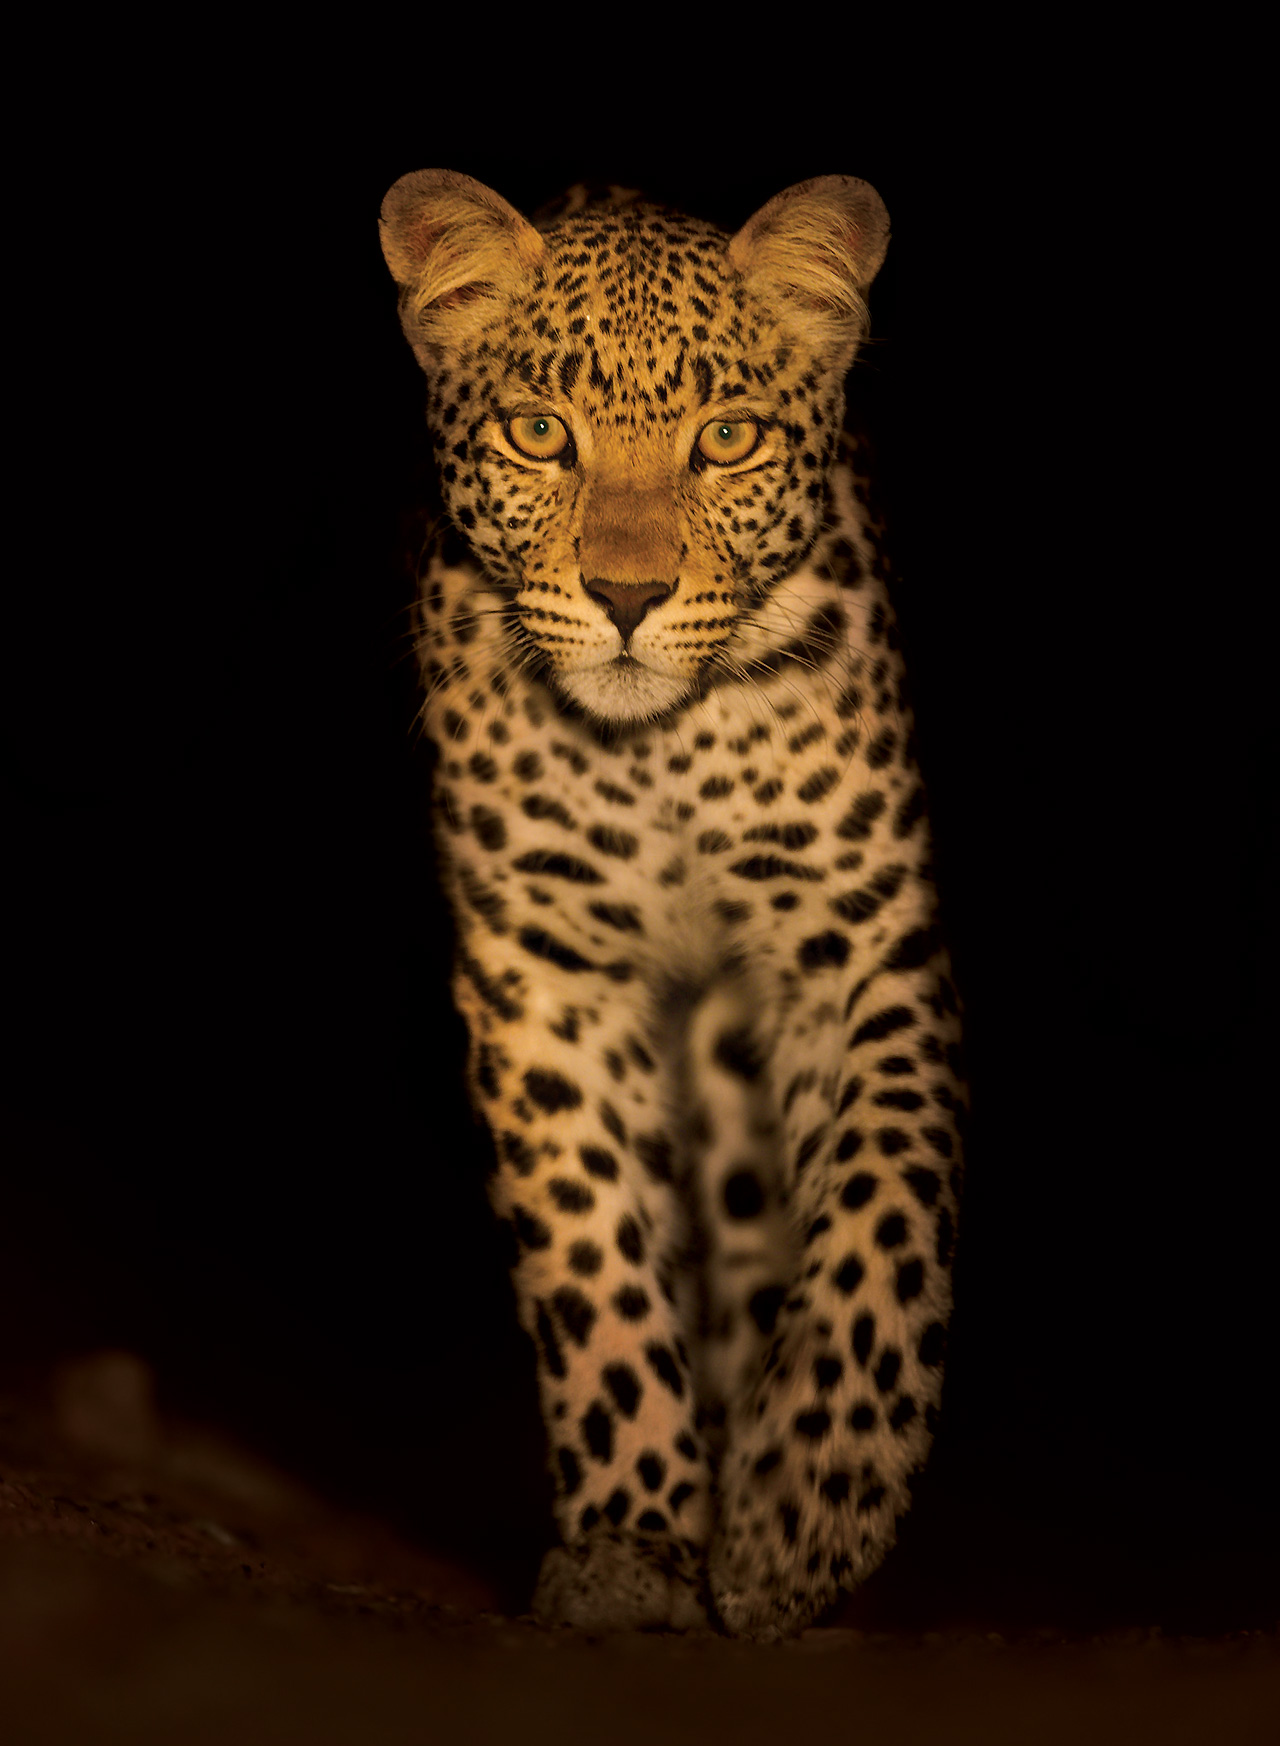 Hannes-Lochner-Kalahari-leopard-walking